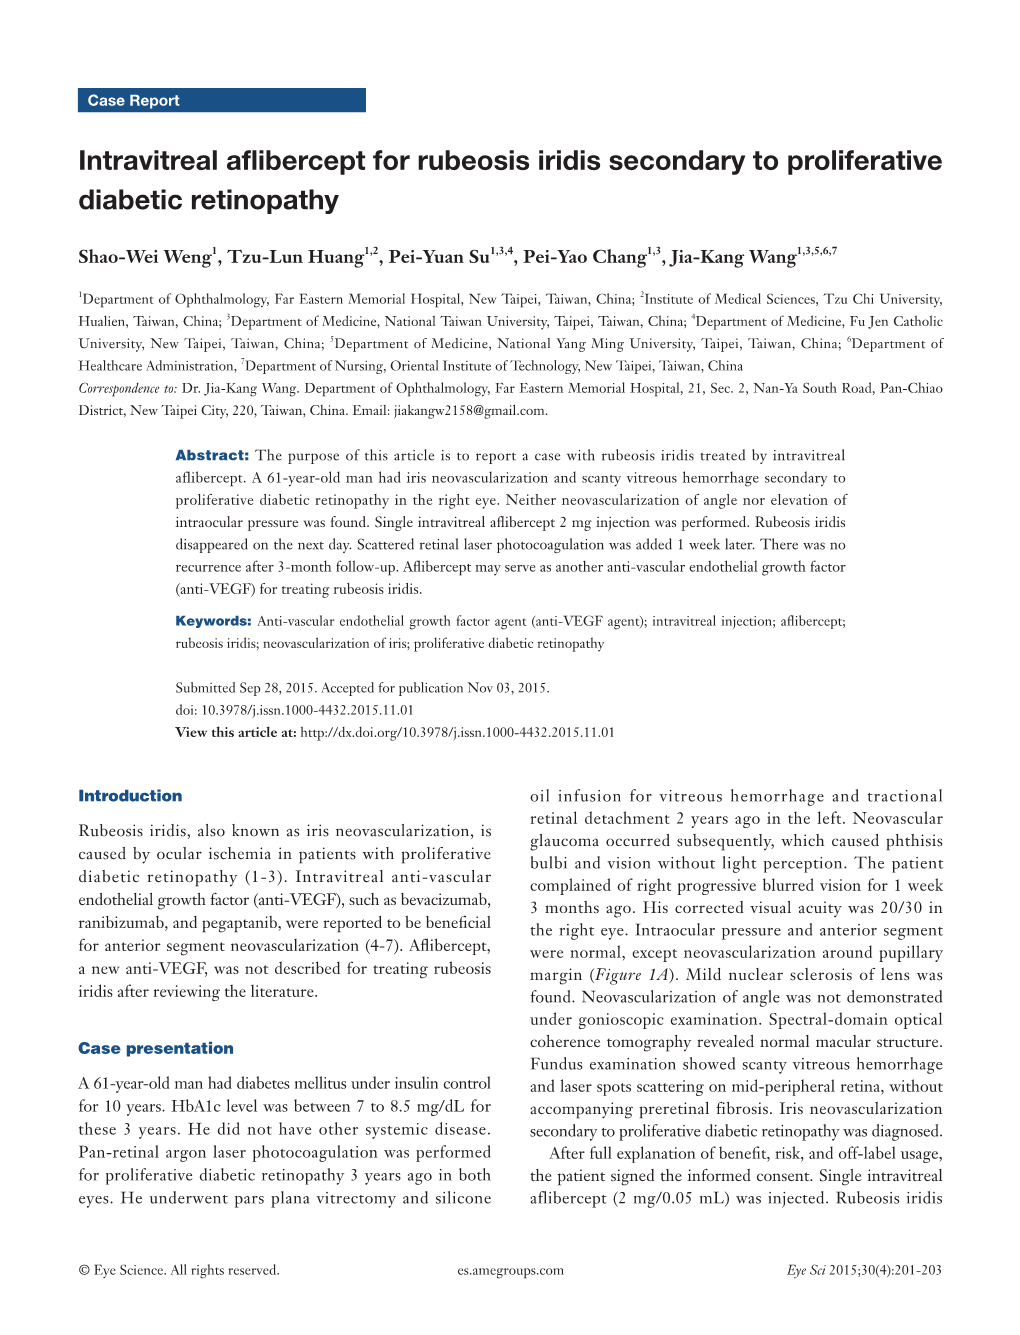 Intravitreal Aflibercept for Rubeosis Iridis Secondary to Proliferative Diabetic Retinopathy